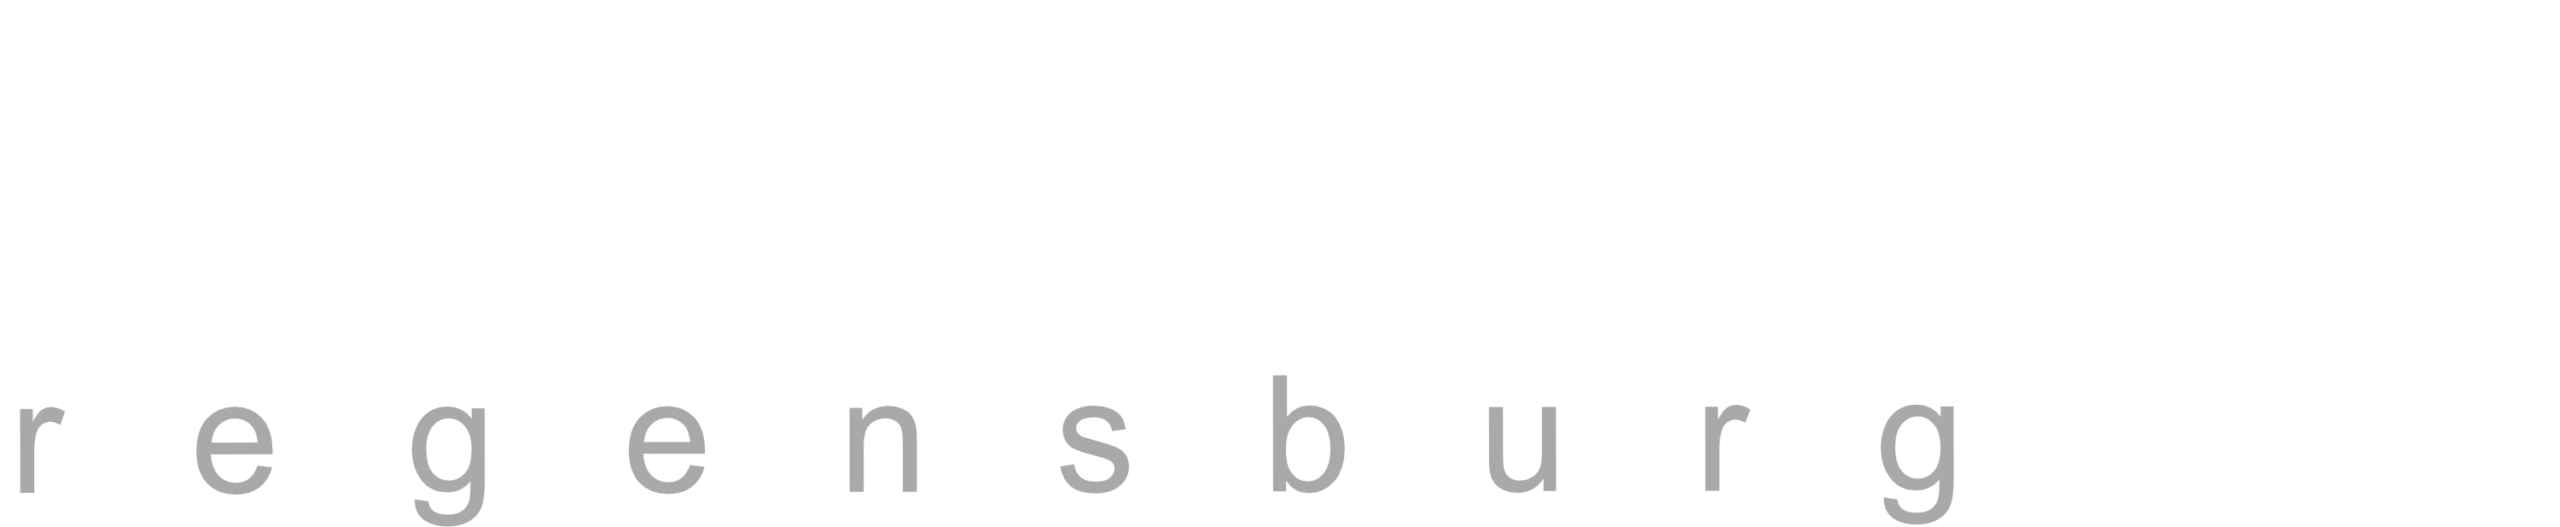 Music College Logo weiss